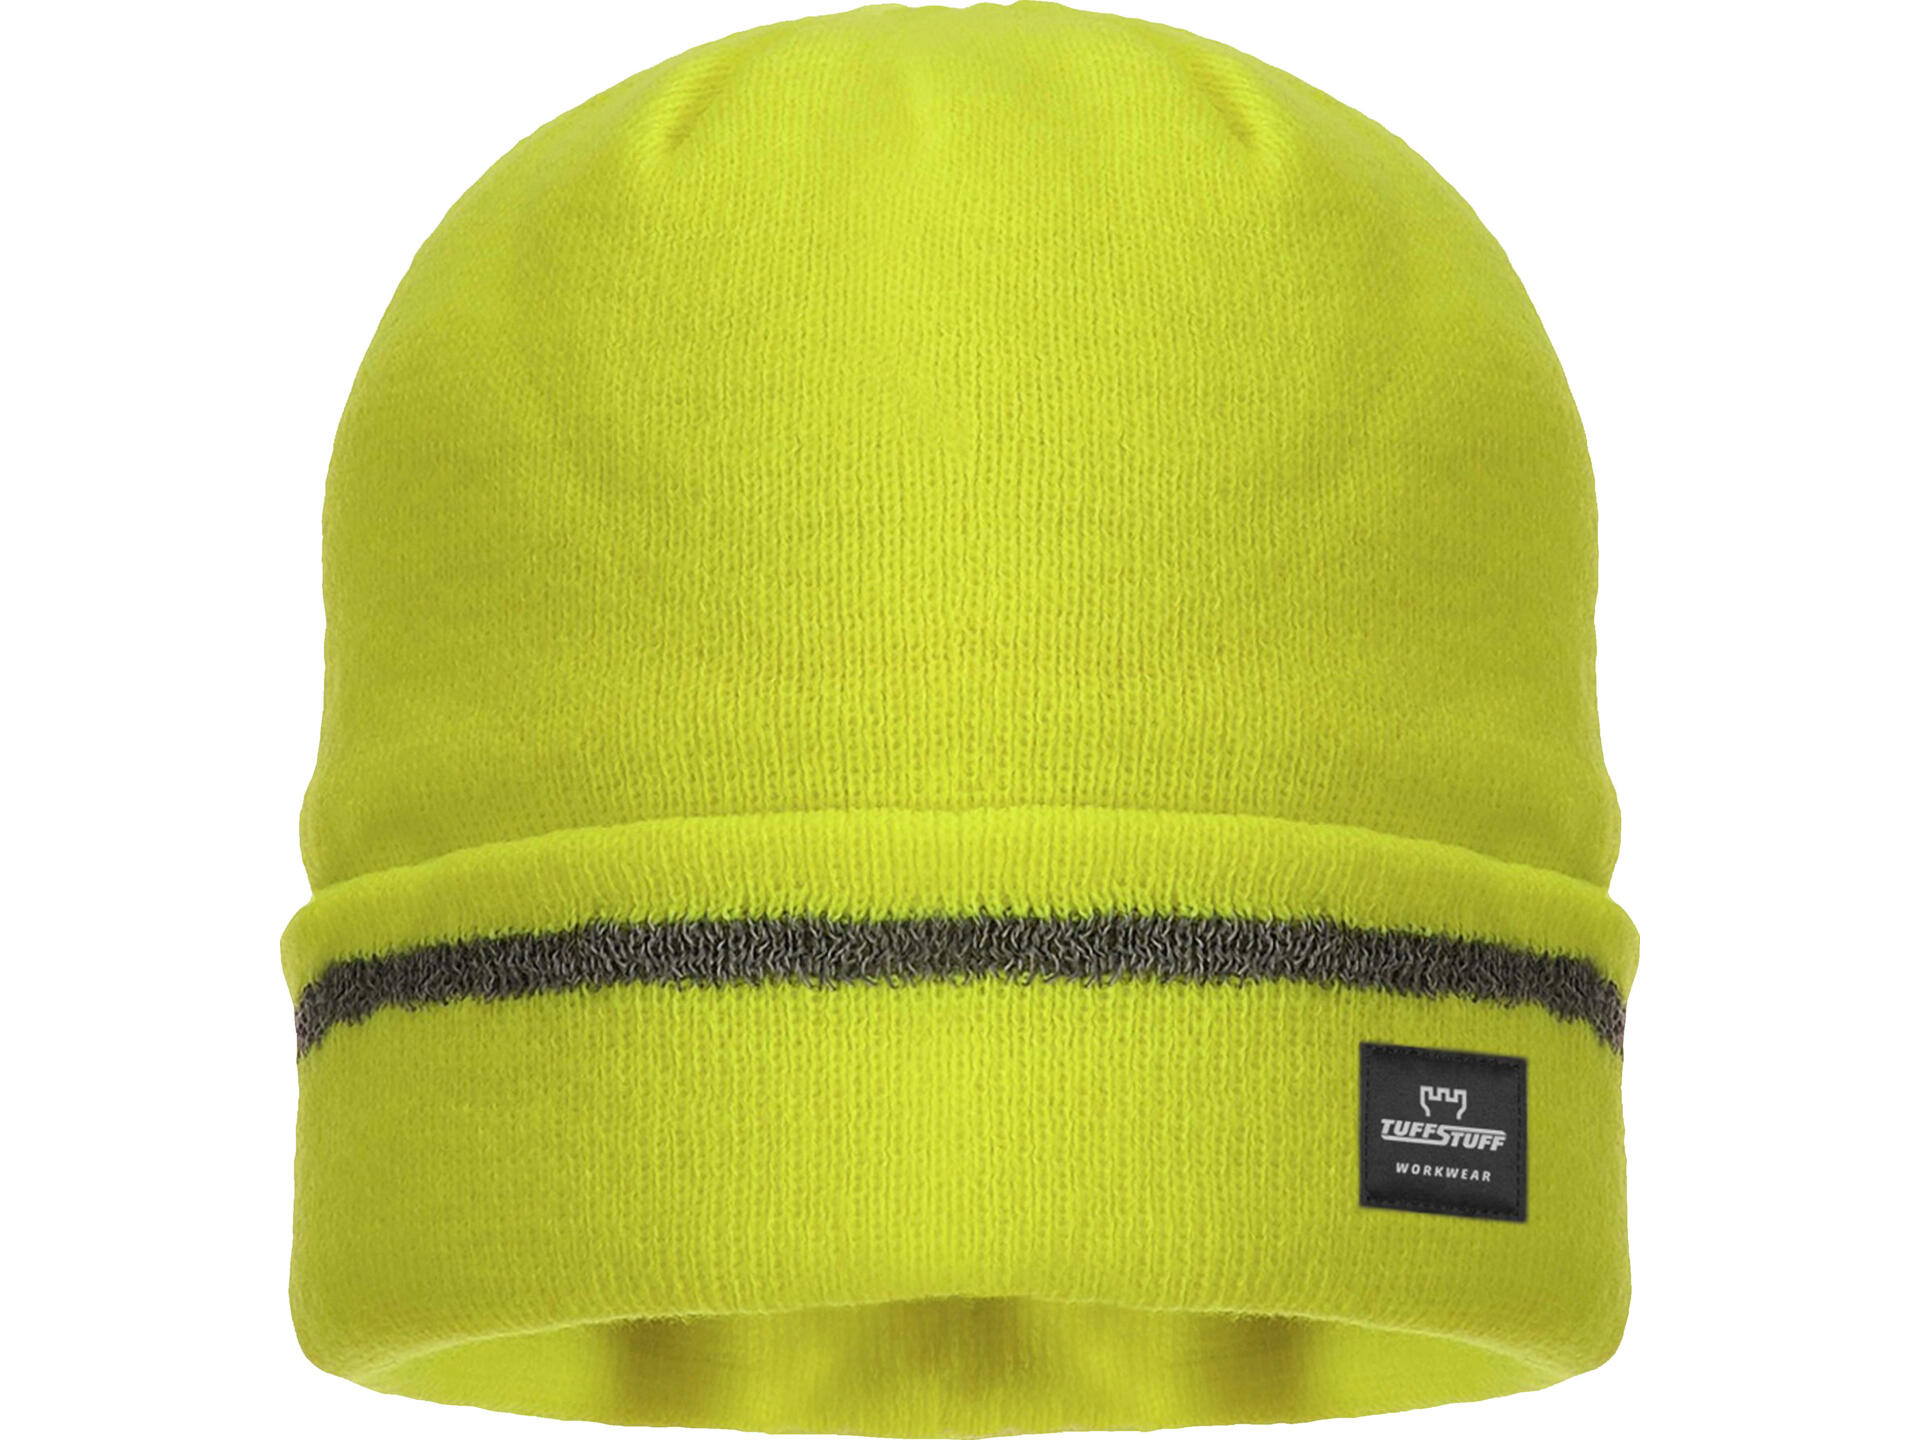 Tuffstuff Thinsulate bonnet jaune